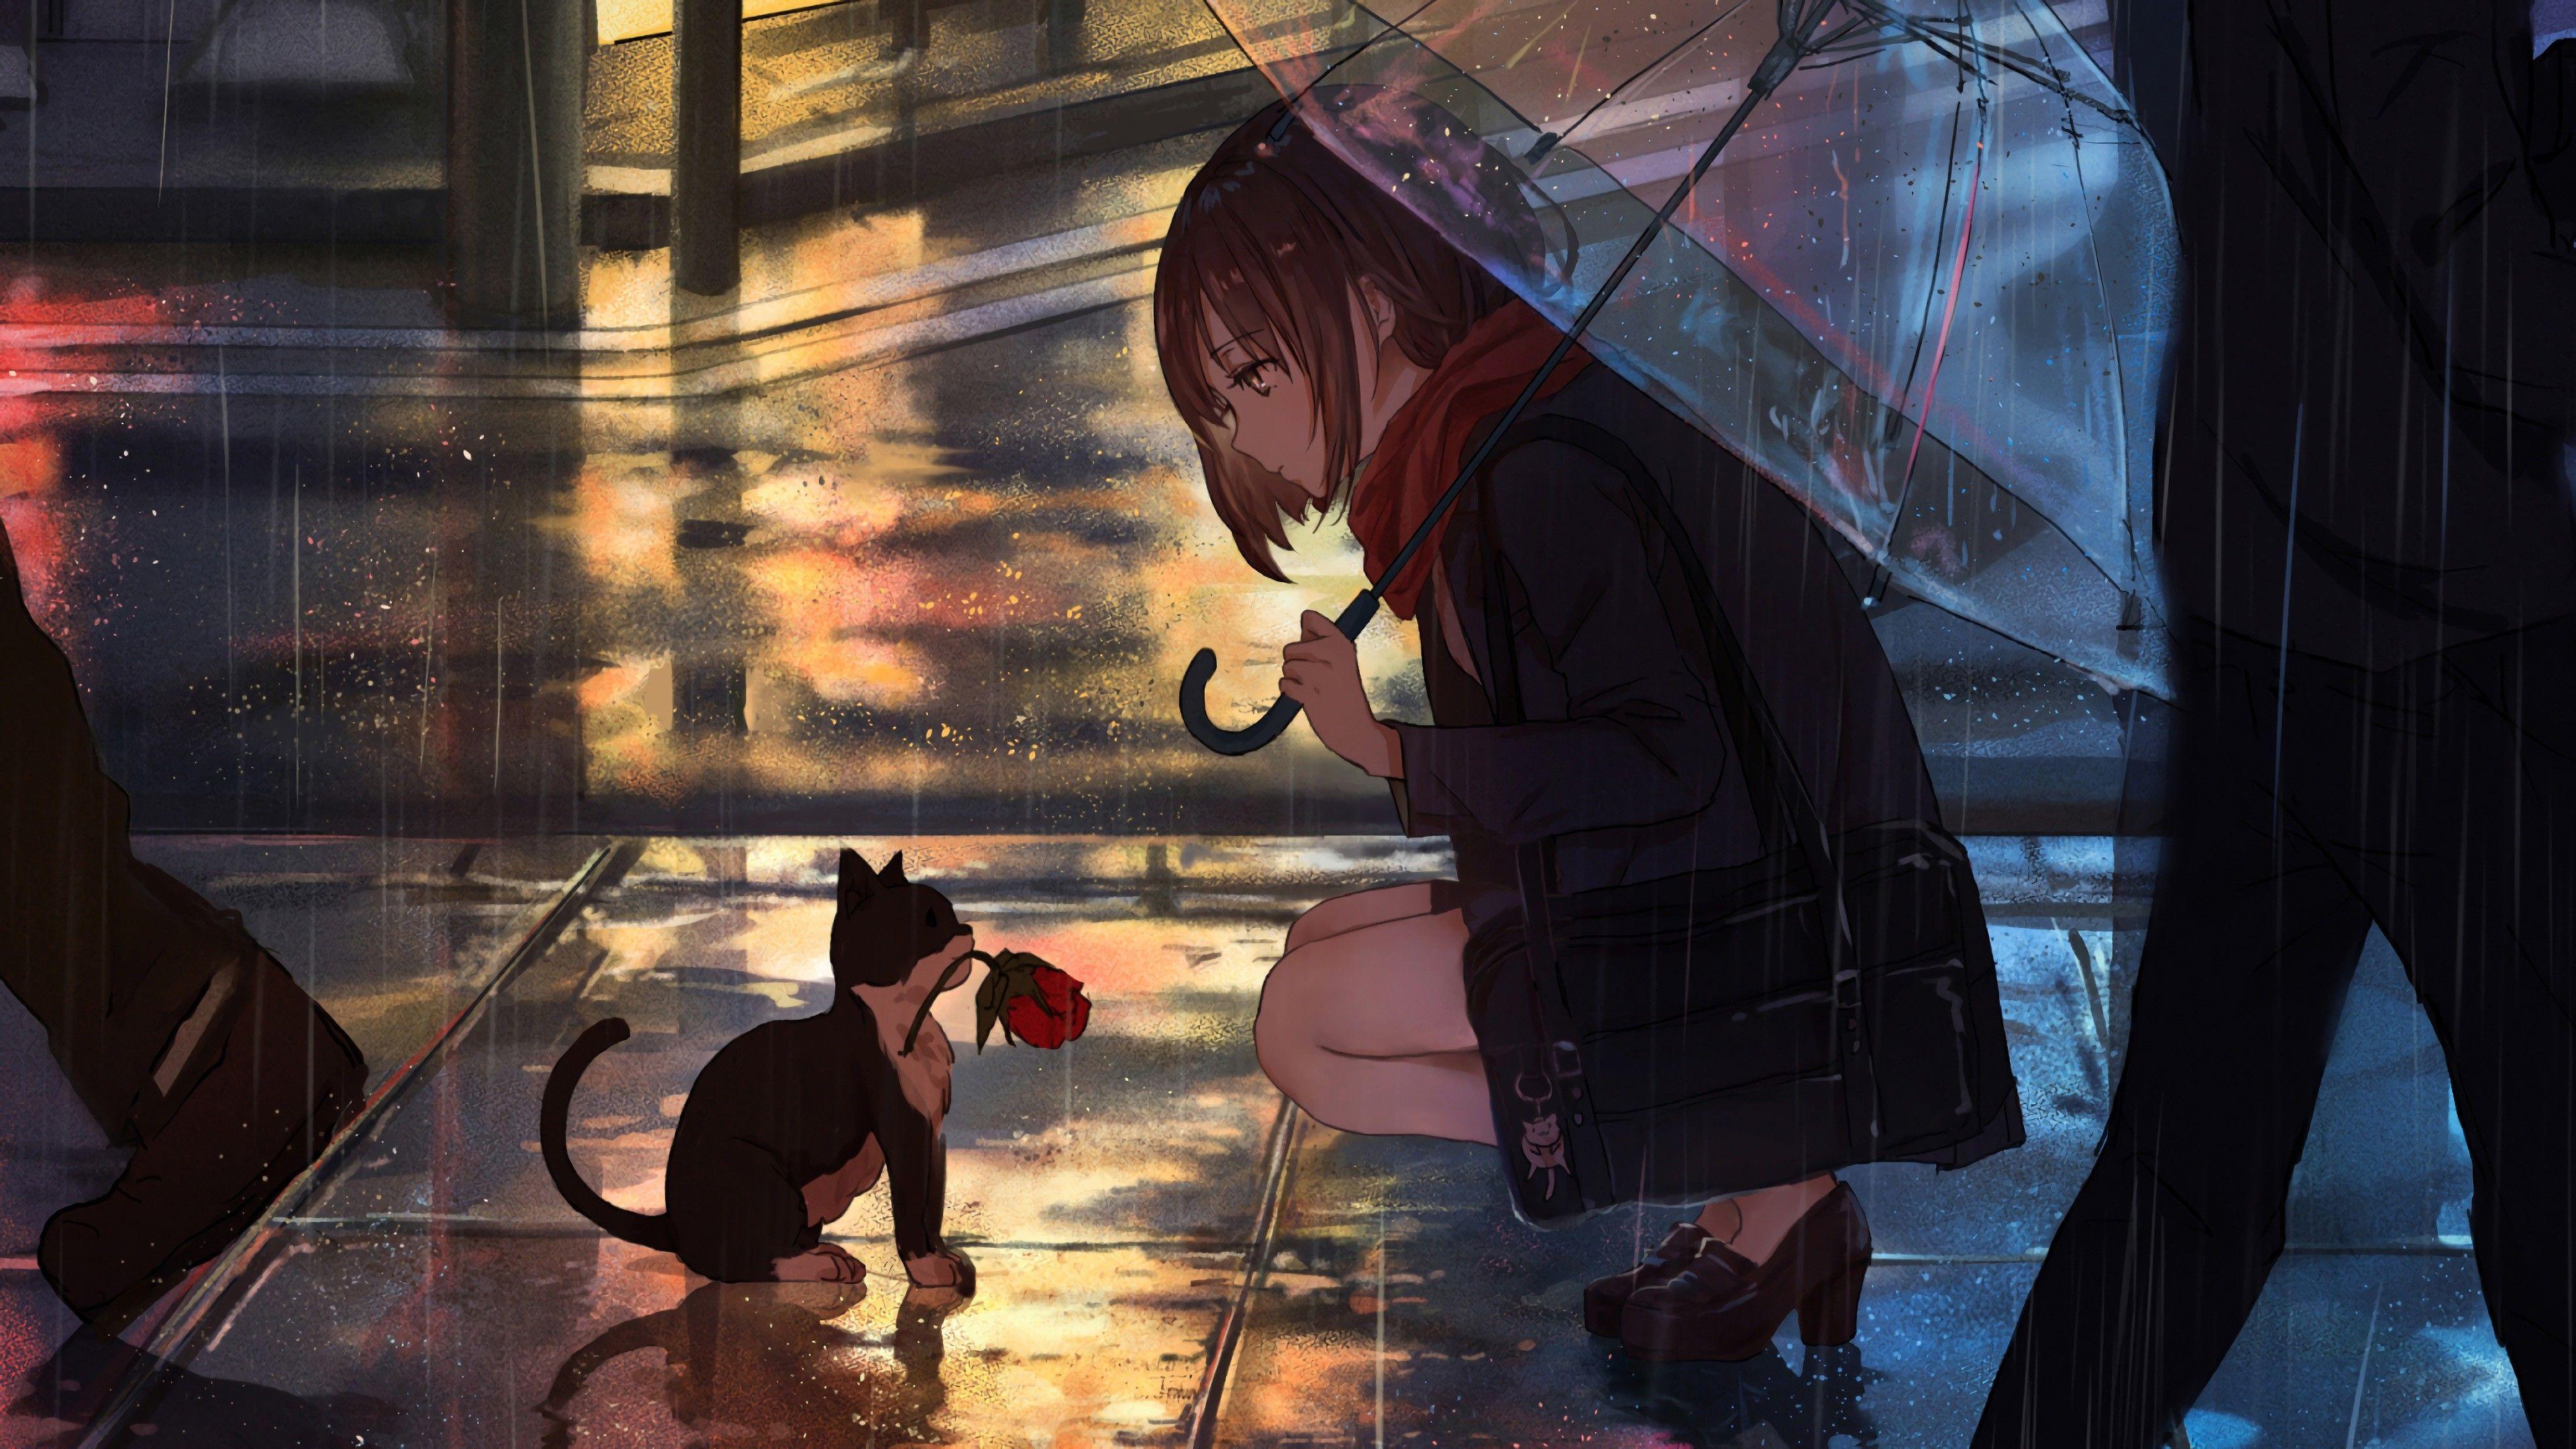 Anime Girl With Umbrella Wallpaper gambar ke 5